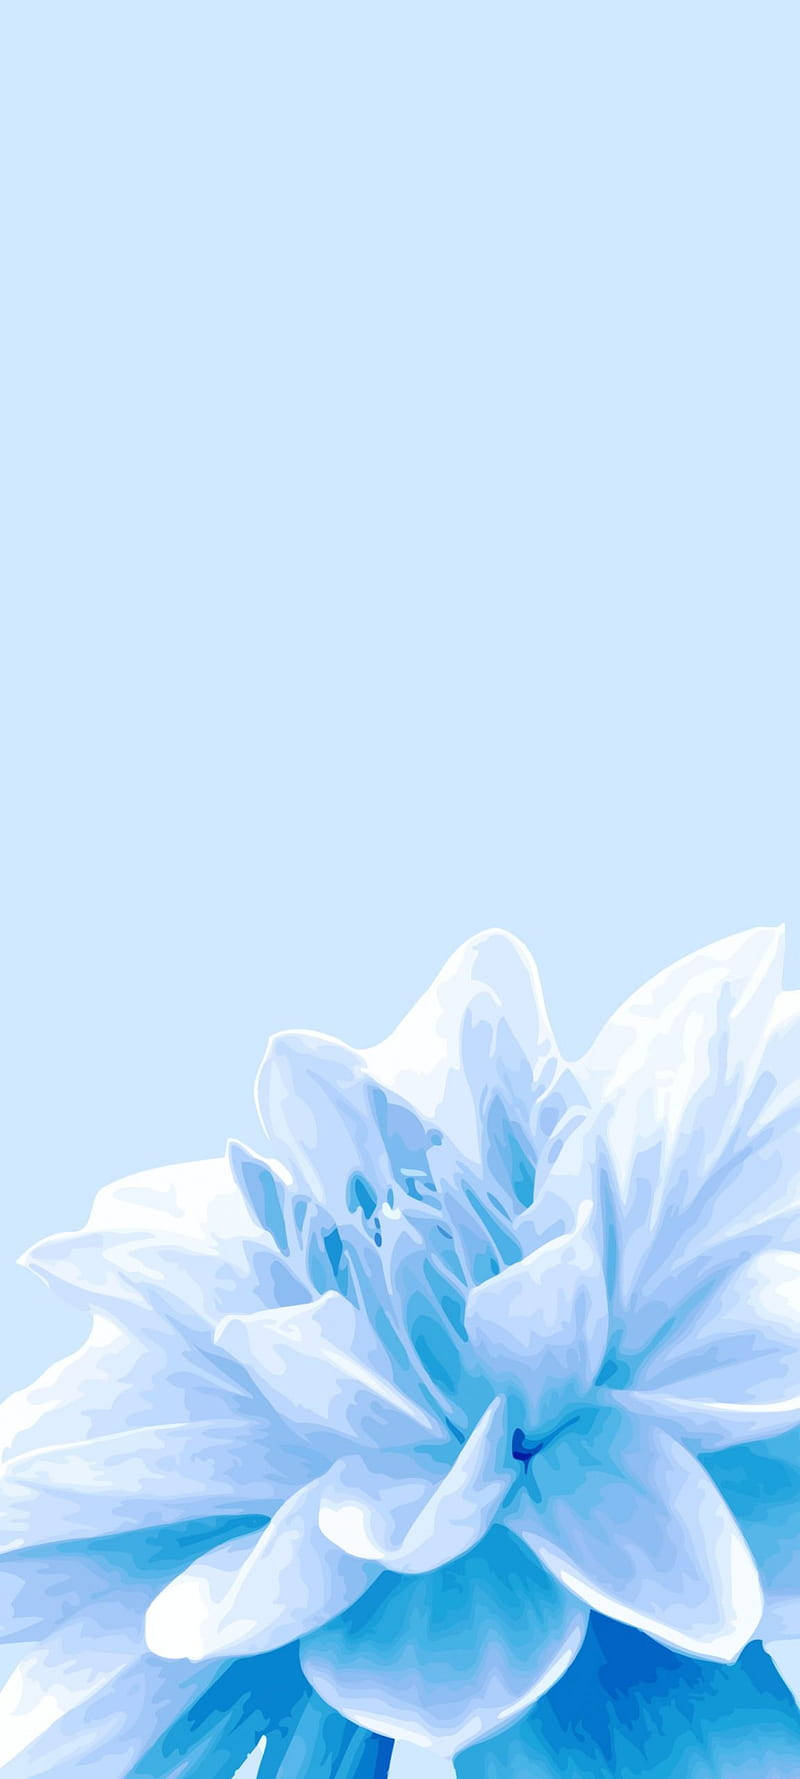 Vibrant 3d Flower Design On A Cute Blue Phone Background